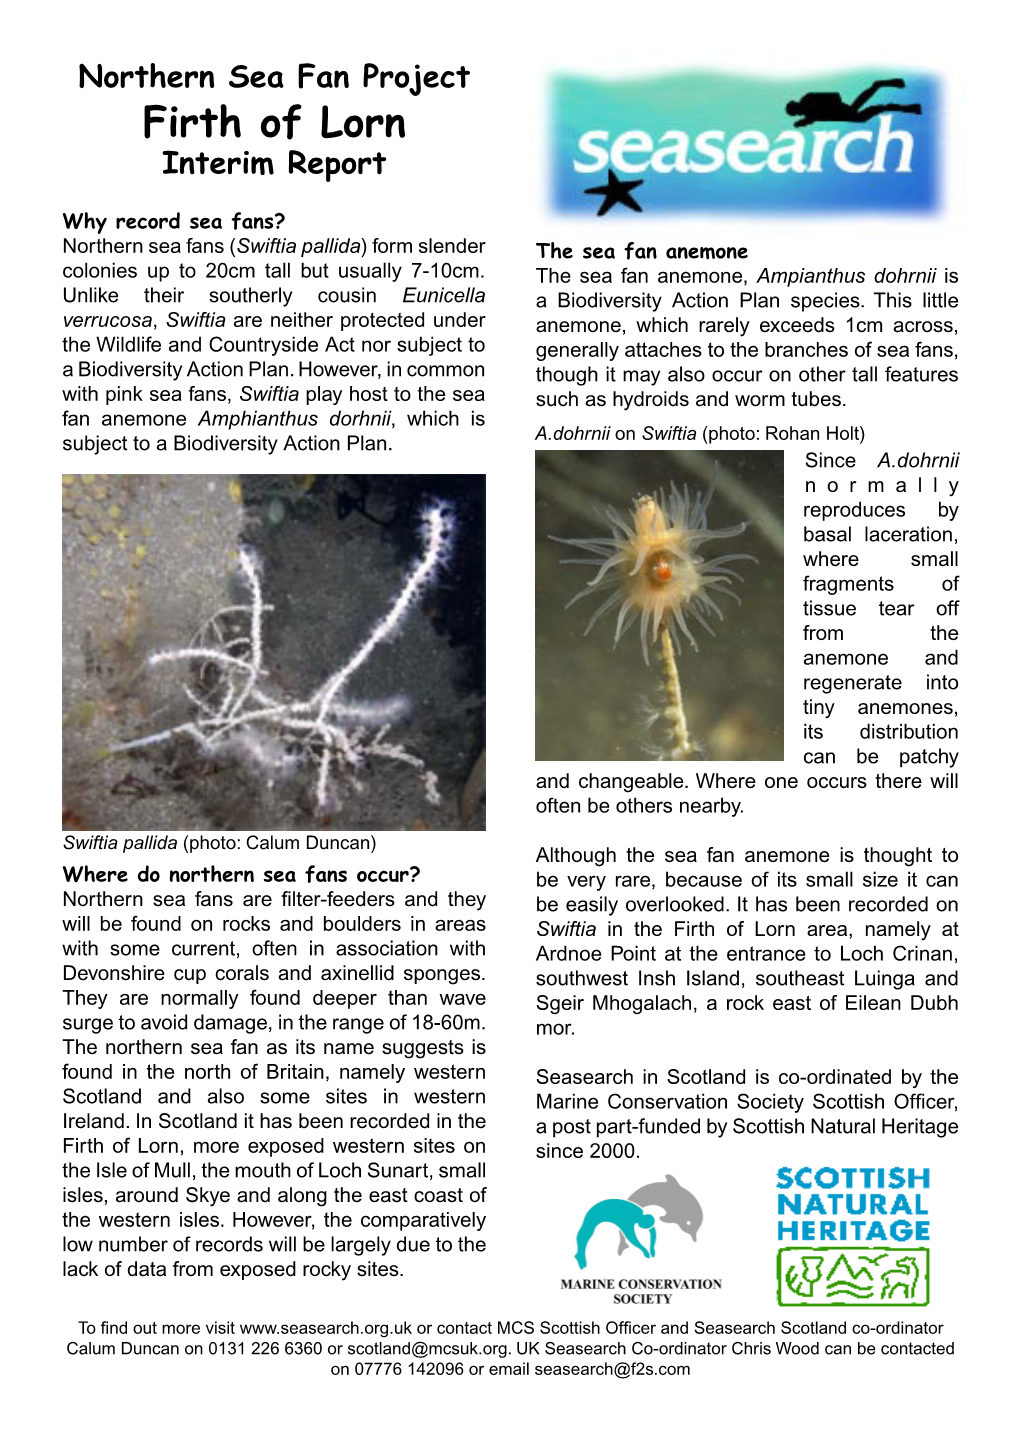 Firth of Lorn, Northern Sea Fan Survey